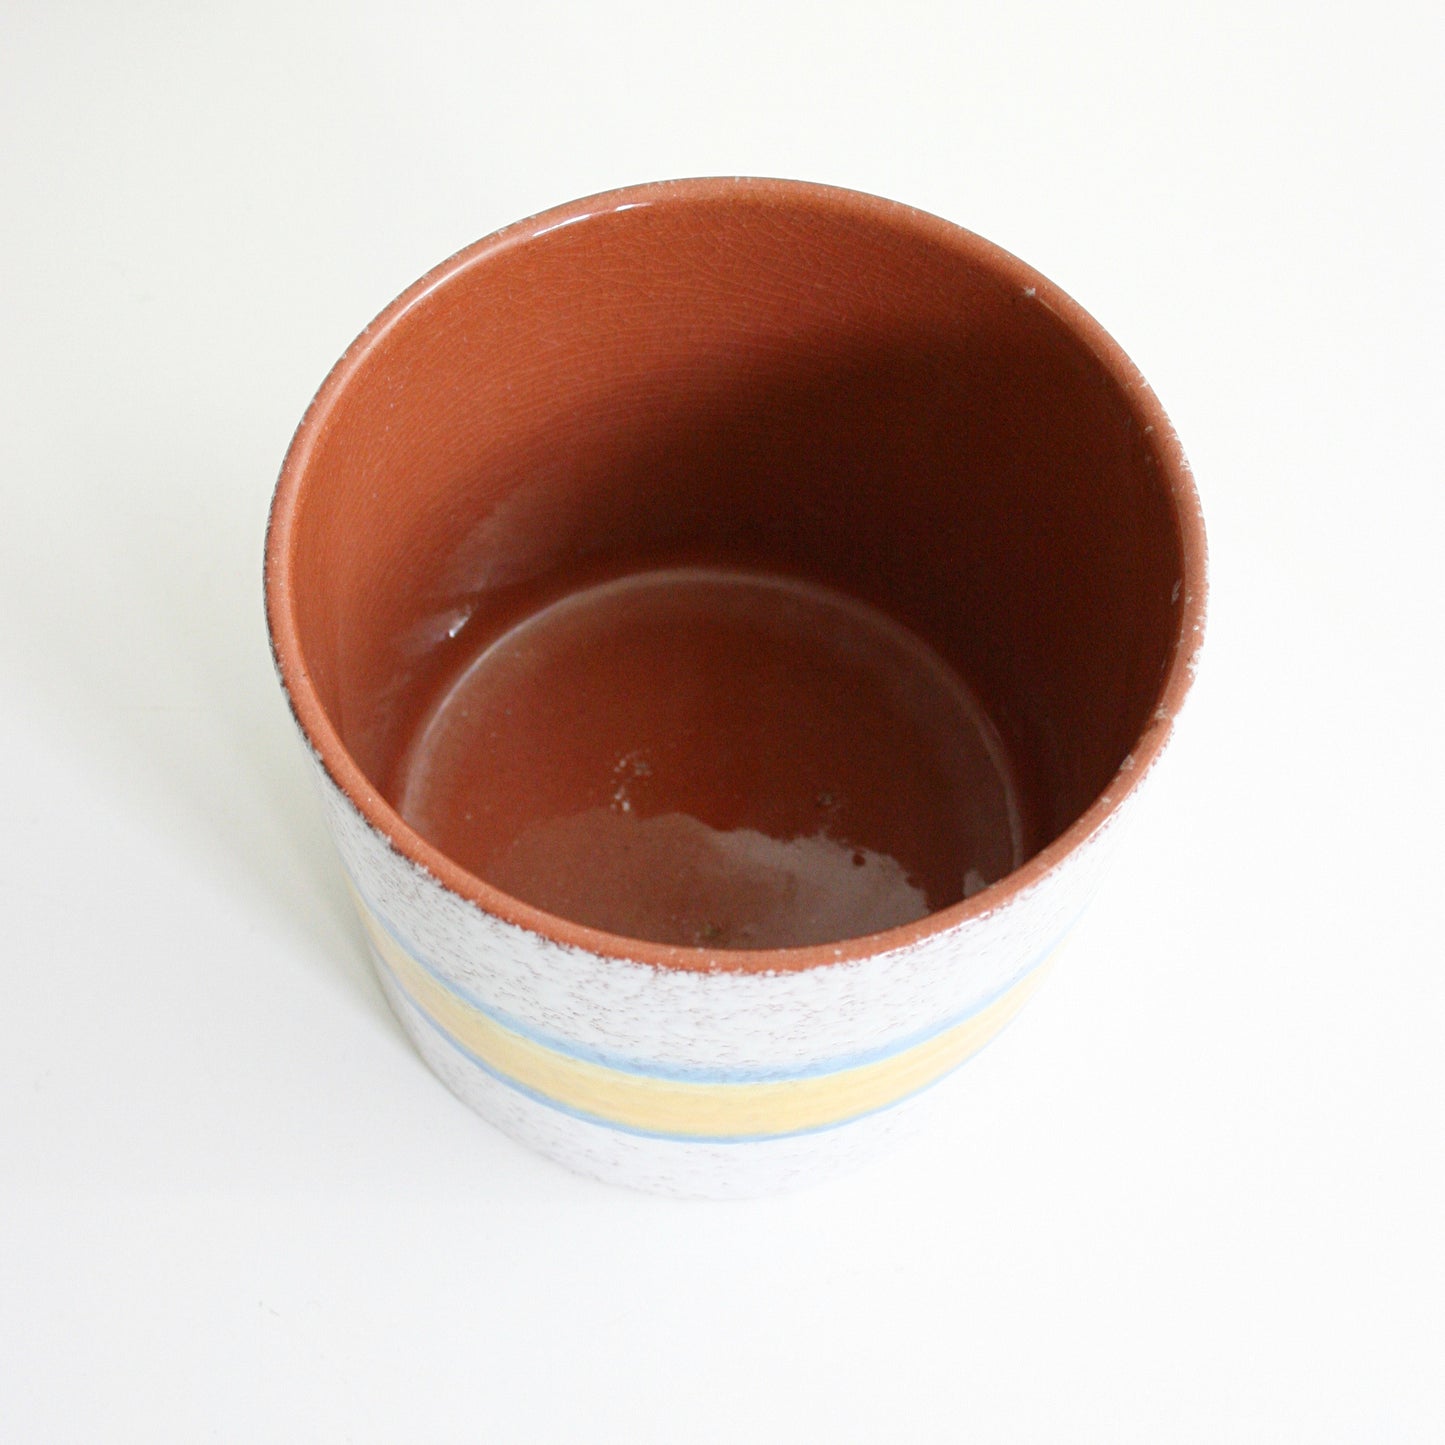 SOLD - Mid Century Modern Roth Keramik Planter / Vintage West German Pottery Flower Pot